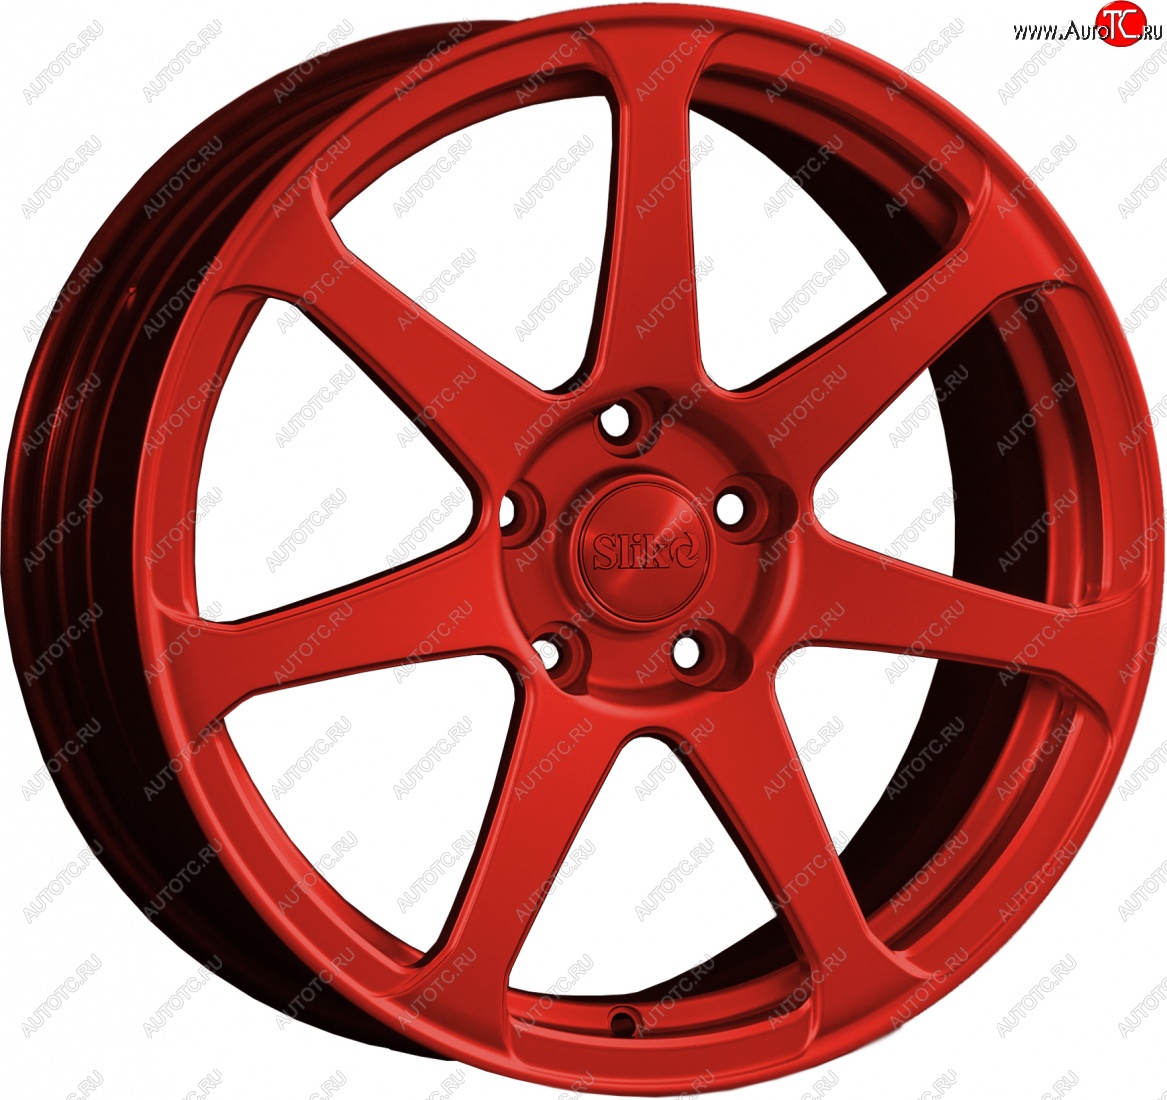 14 499 р. Кованый диск Slik classik R17x7.5 Candy RED красный 7.5x17 Toyota Allion T260 седан дорестайлинг (2007-2010) 5x100.0xDIA54.1xET45.0 (Цвет: Candy RED красный 7.5x17)